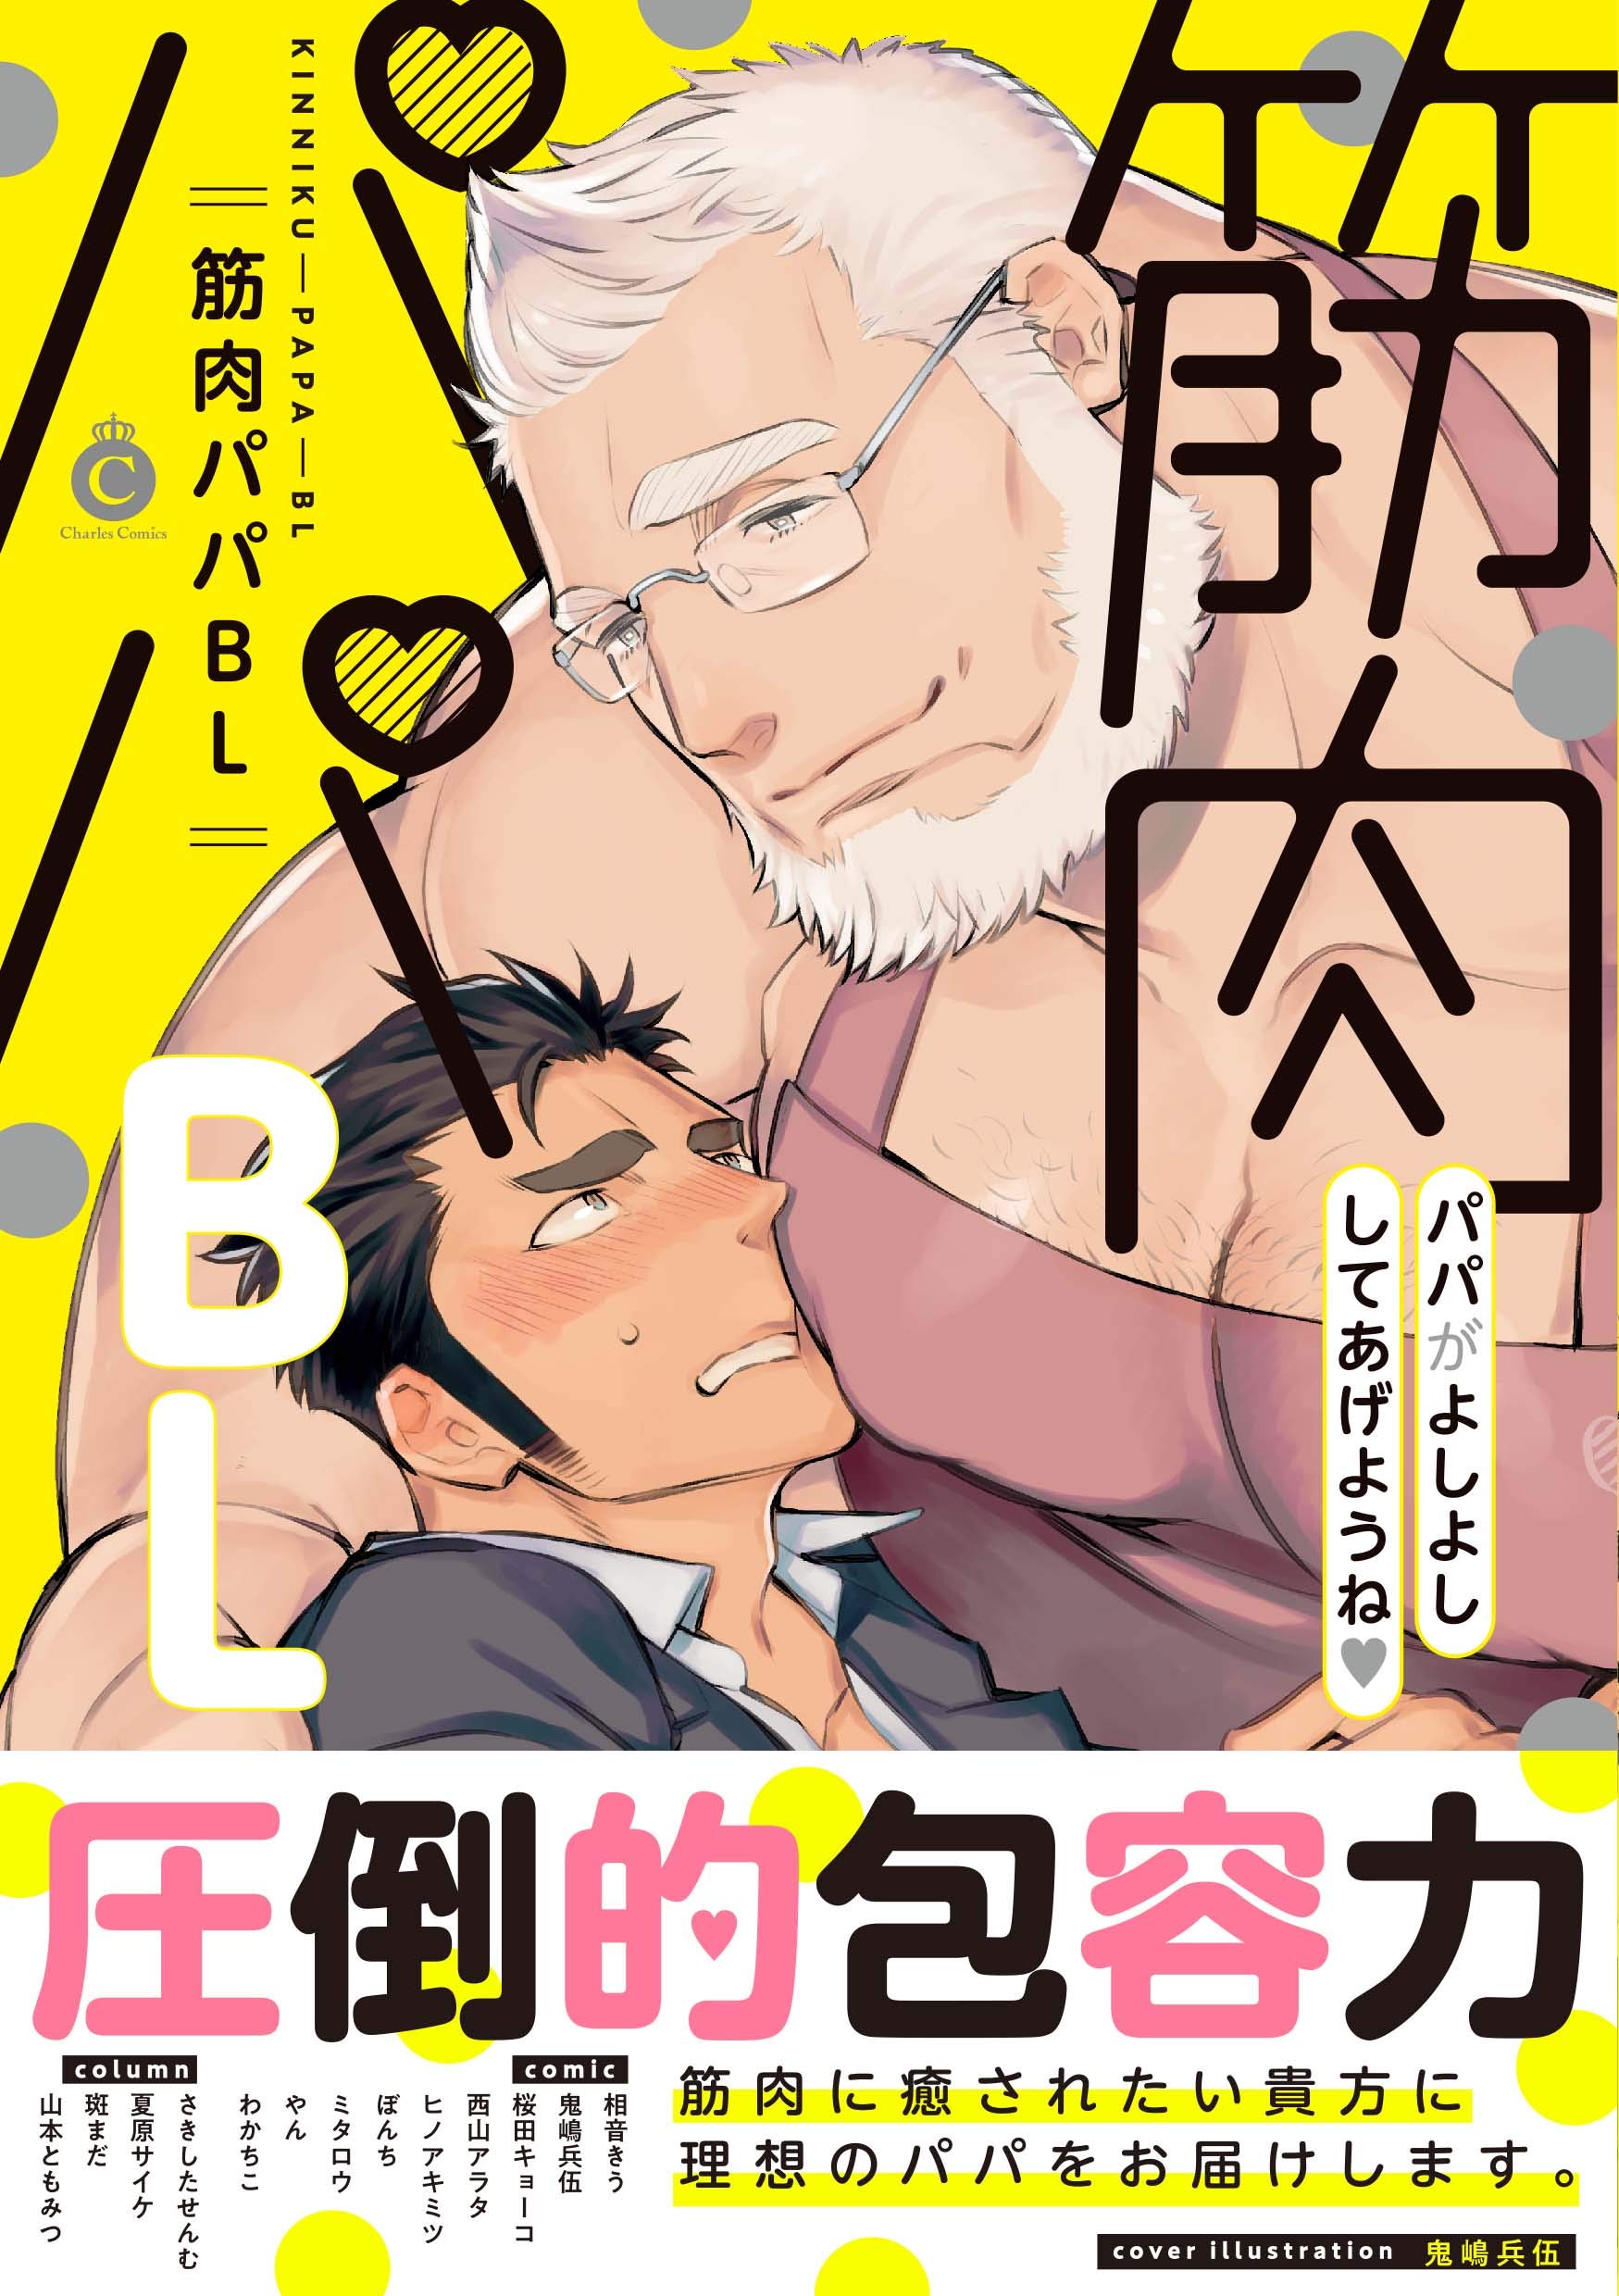 Boys Love (Yaoi) Comics - Kinniku Papa BL (筋肉パパBL (Charles Comics)) / Kijima Hyougo